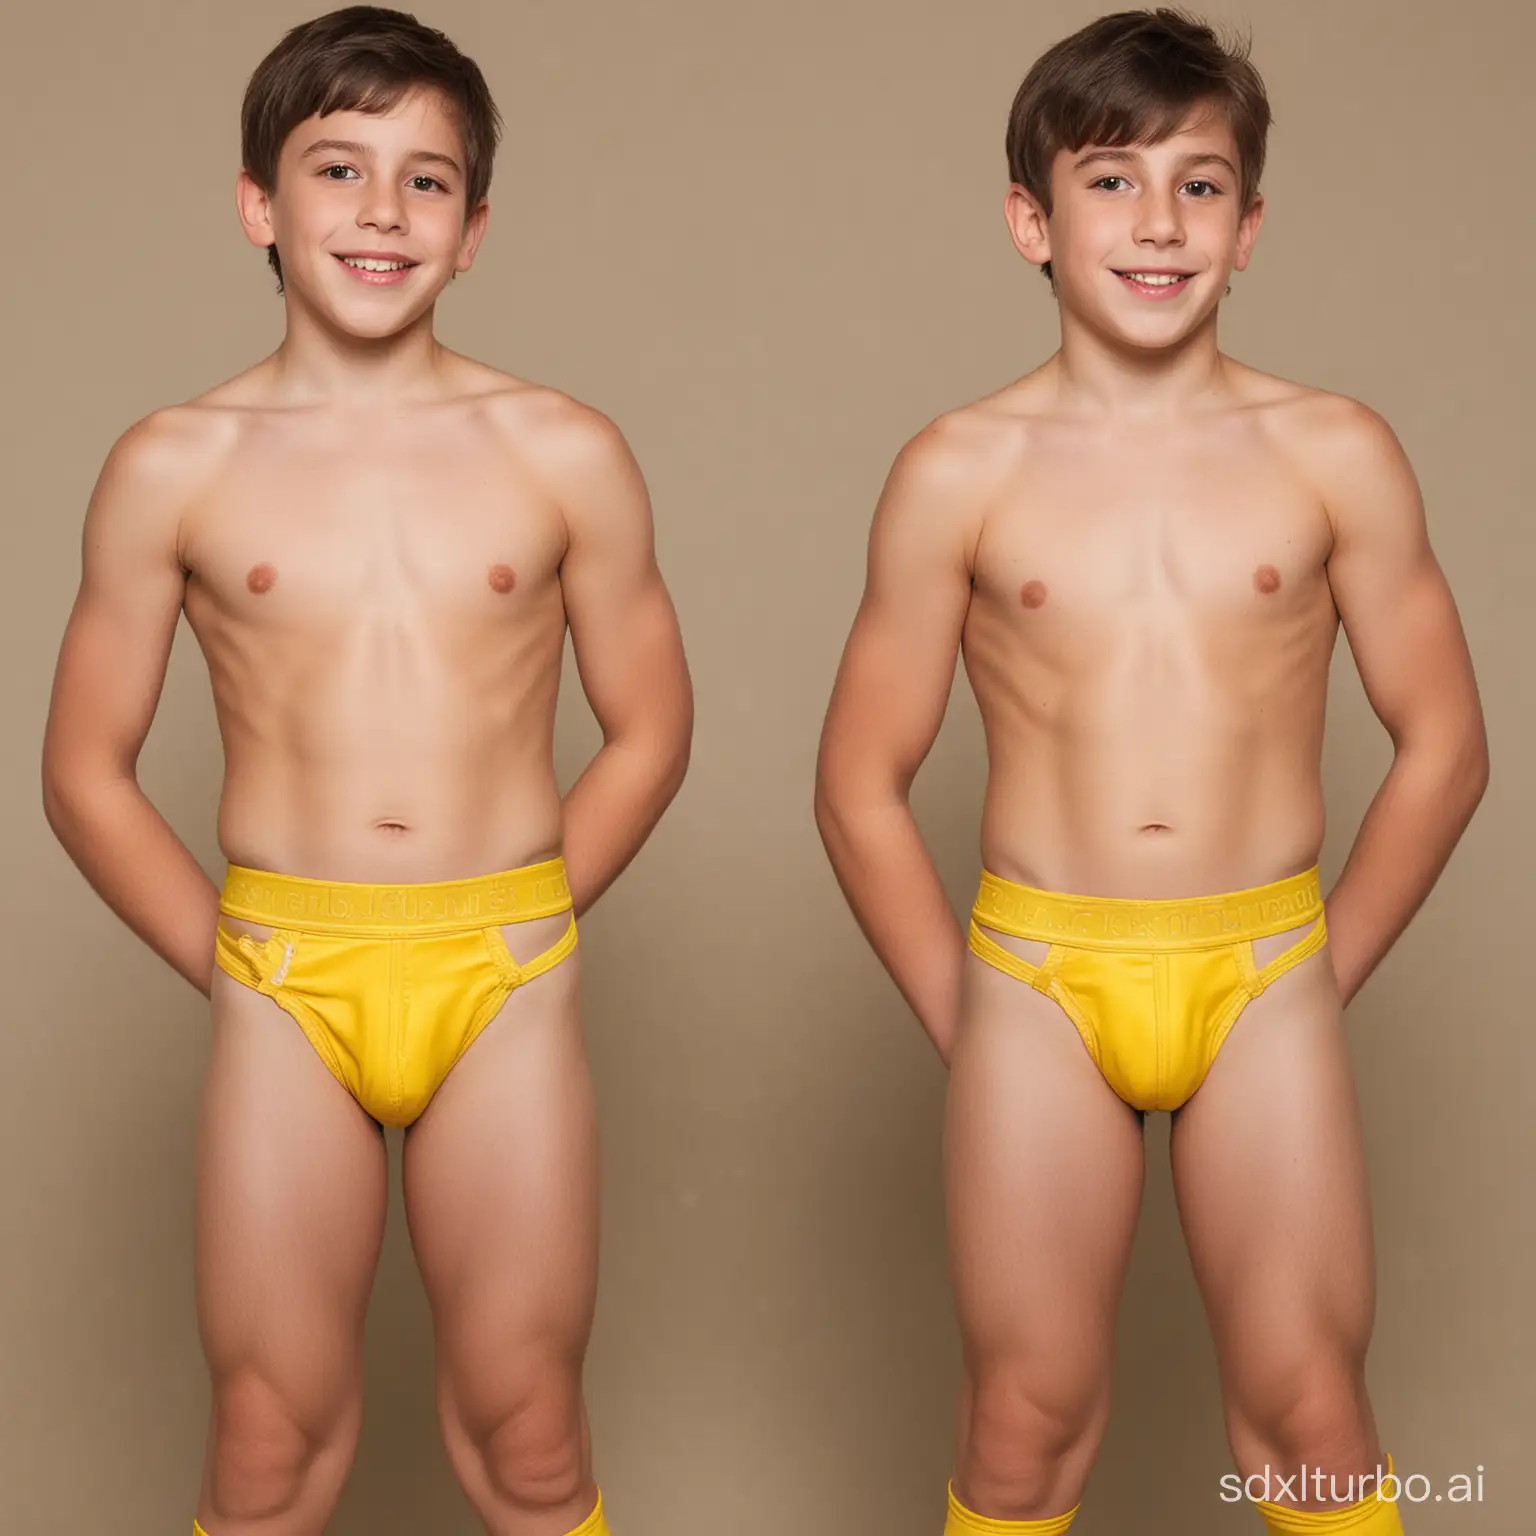 Two boys in yellow jockstraps